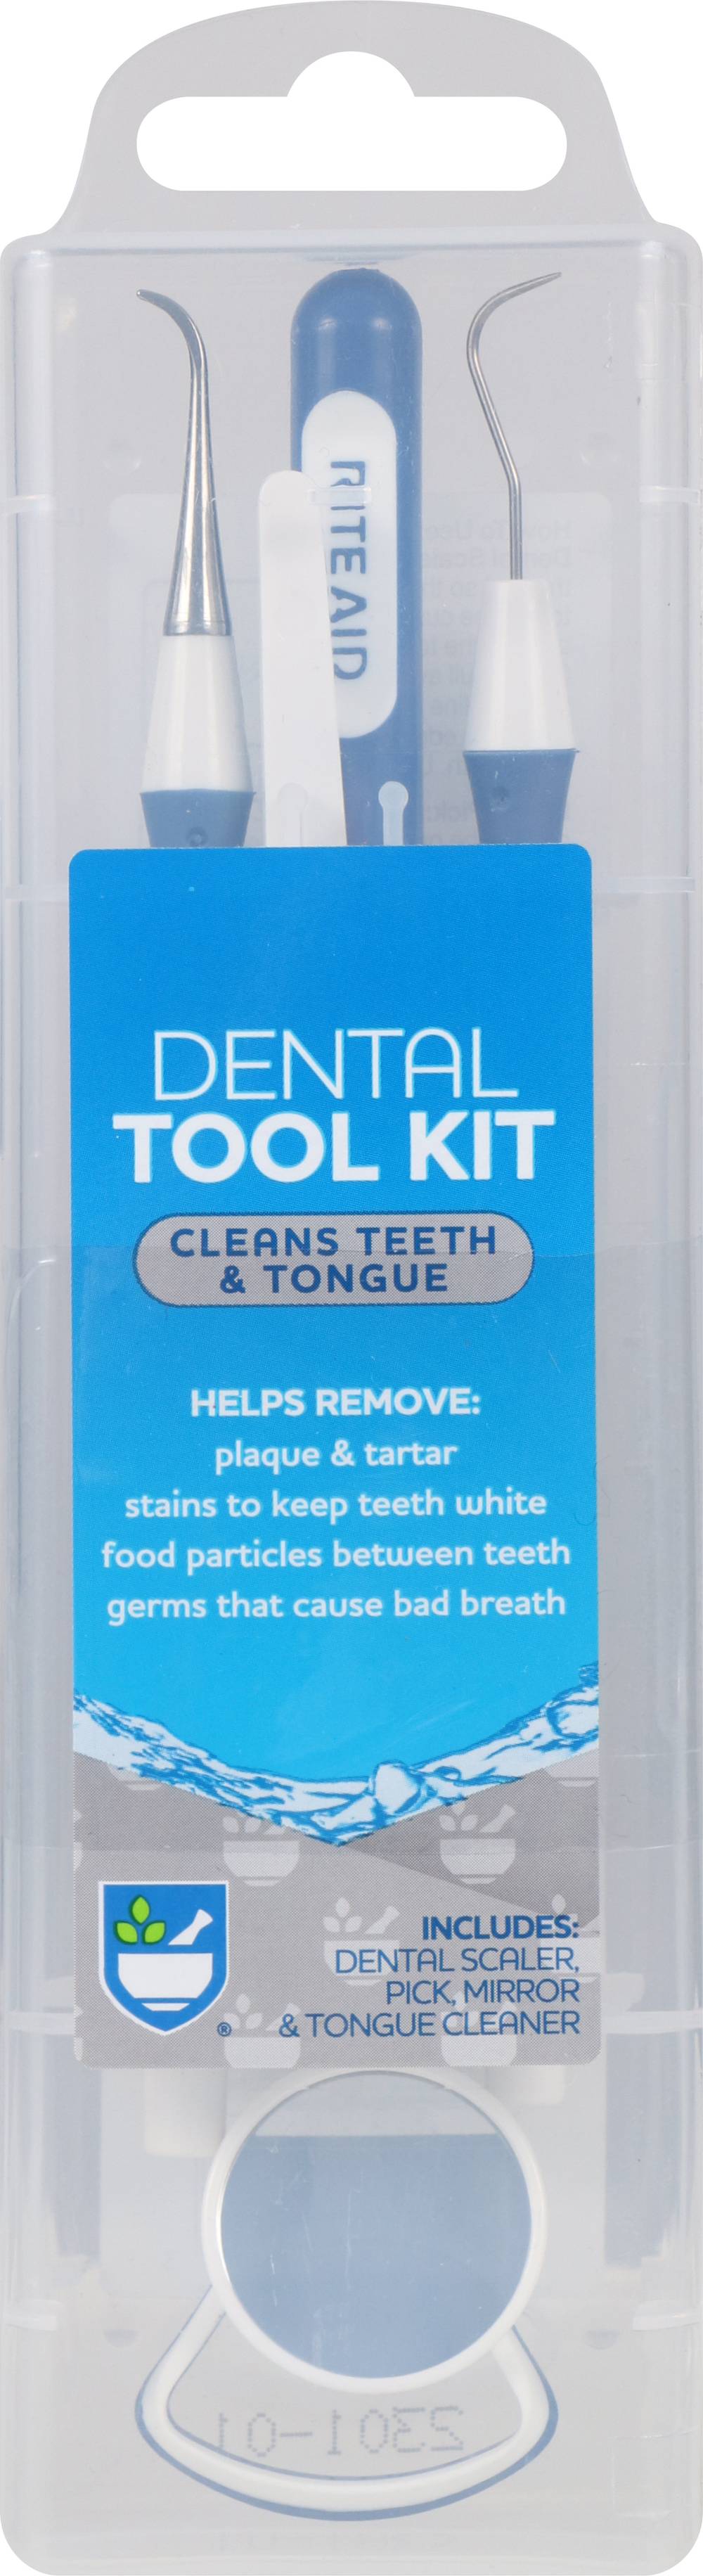 Rite Aid Oral Care Dental Tool Kit